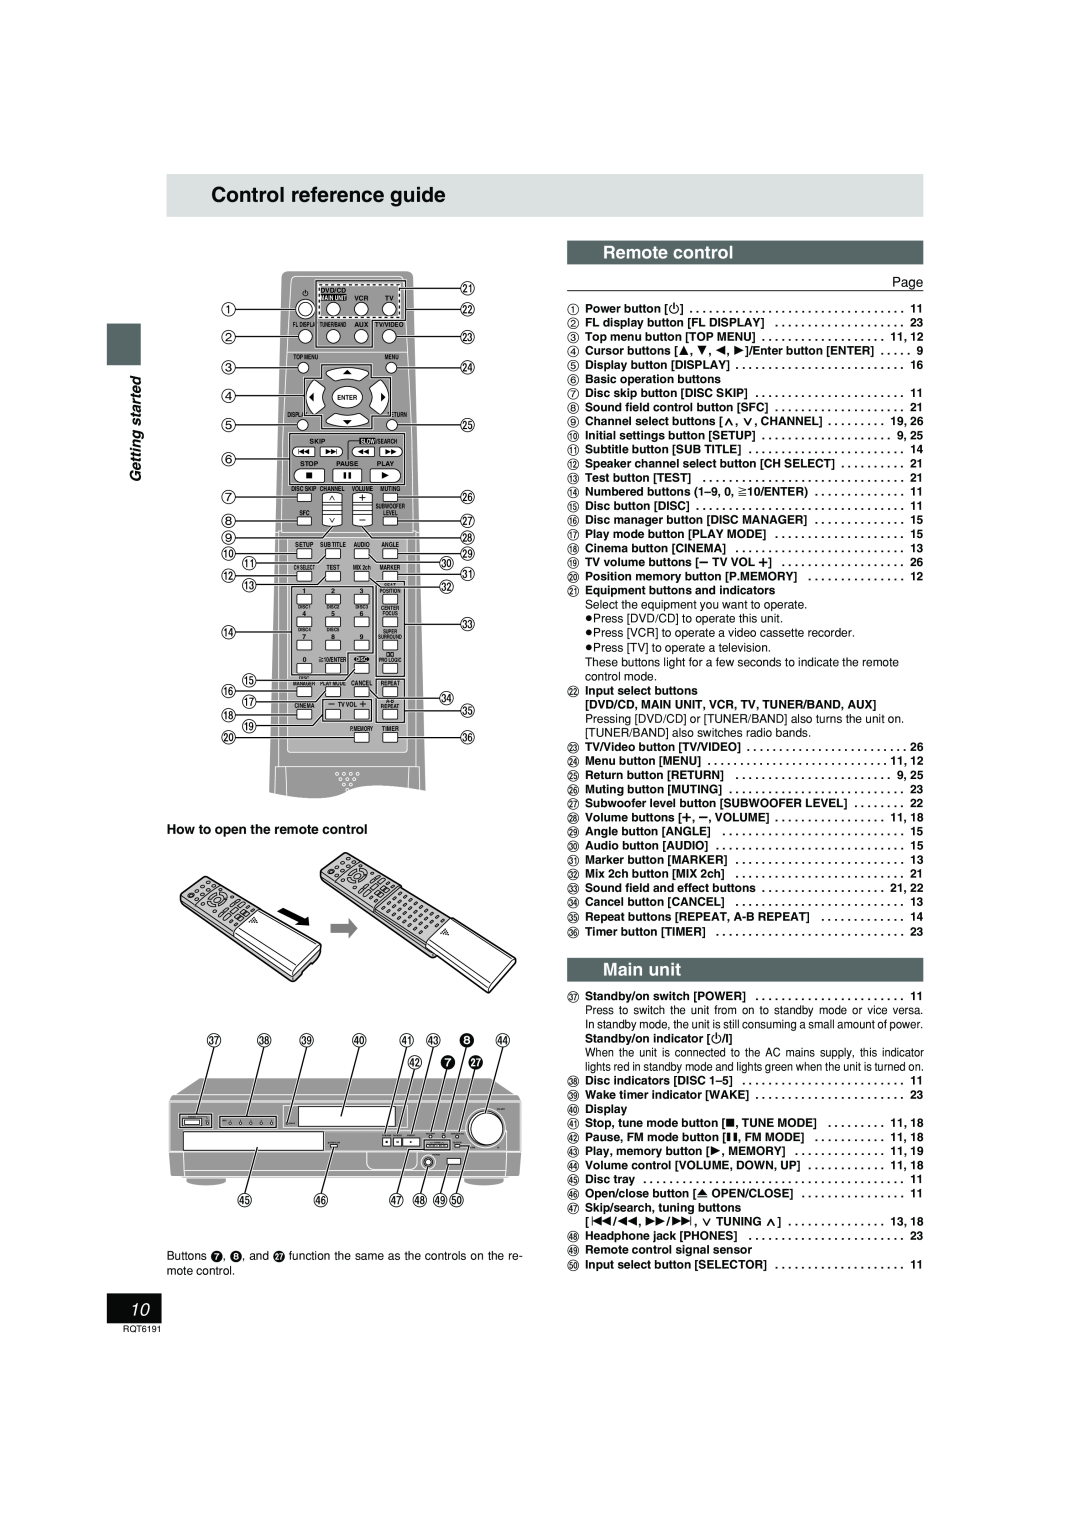 Panasonic SC-HT67 warranty Control reference guide, Remote control, Main unit, Z 7 K 